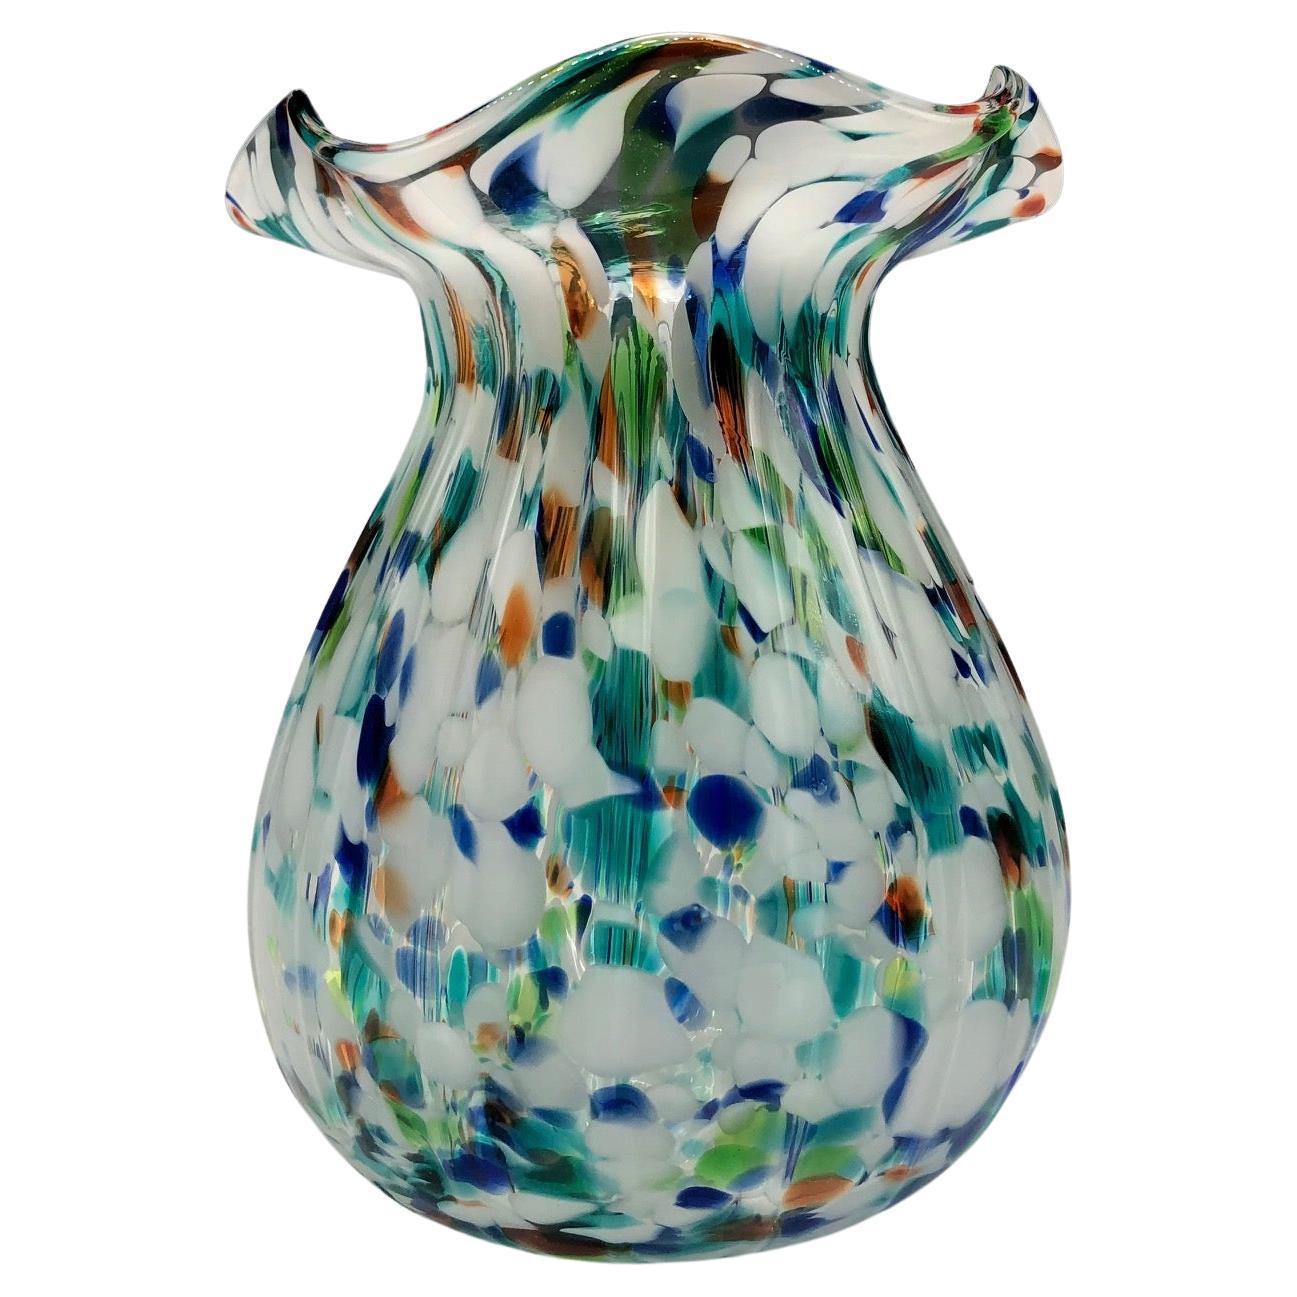 Mehrfarbige Vintage-Kunstglasvase im Murano-Stil mit Konfettiwirbel-Muranoglas